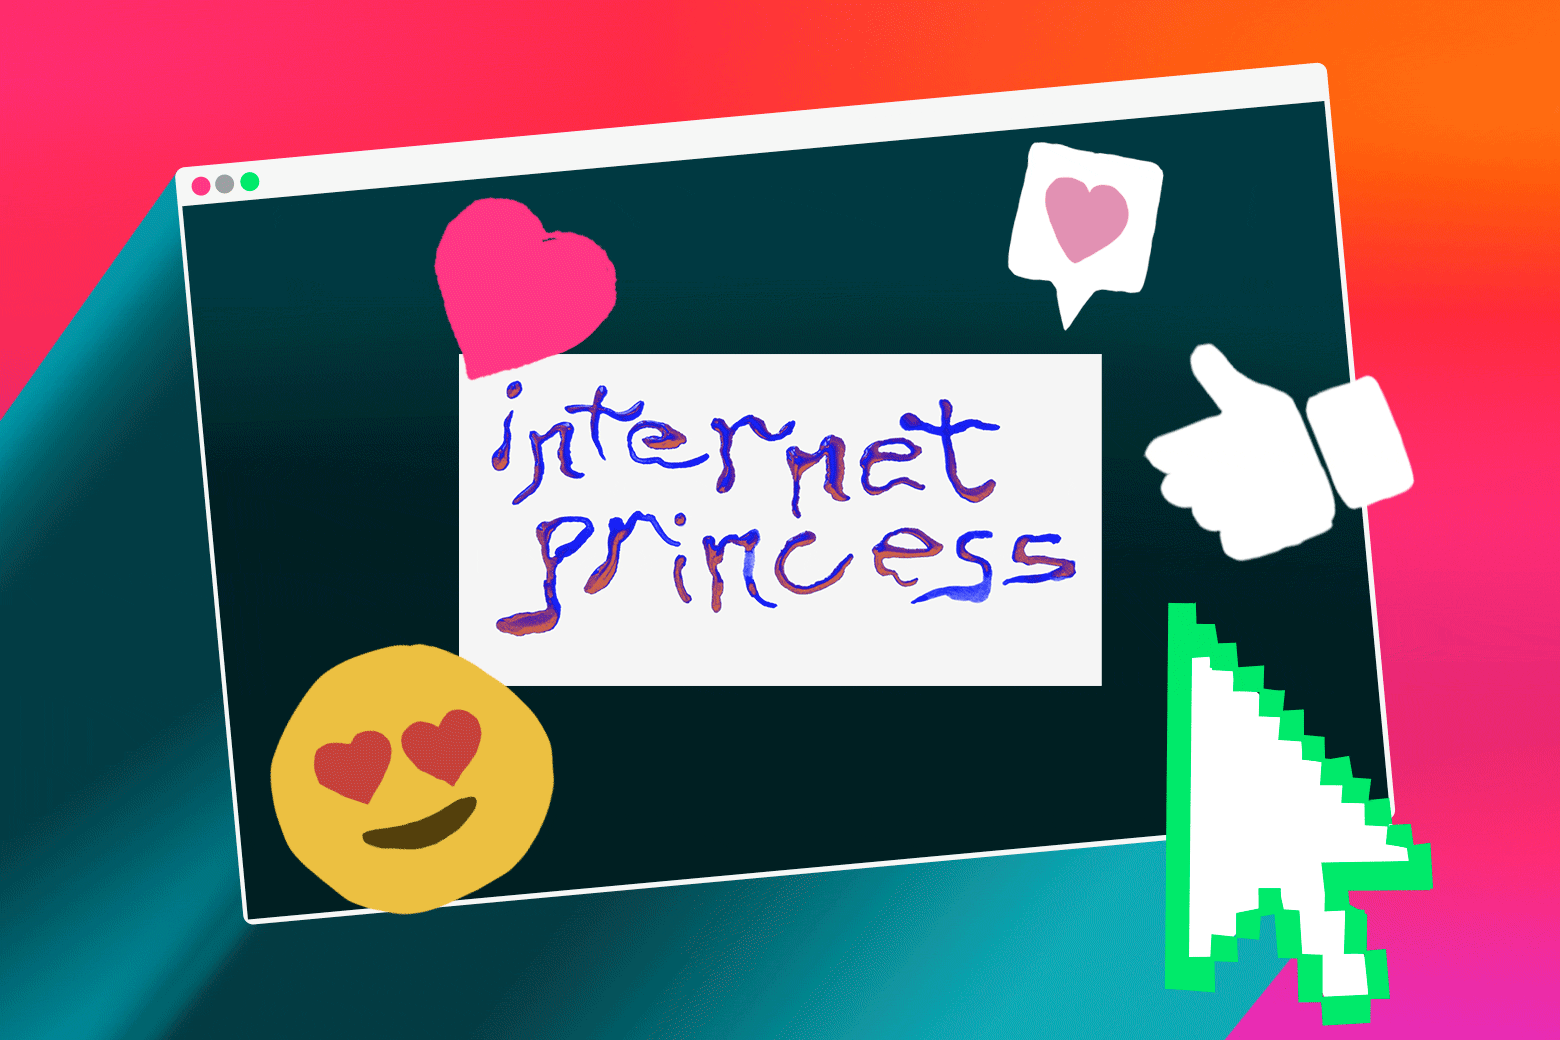 Meet the Internet’s Princess